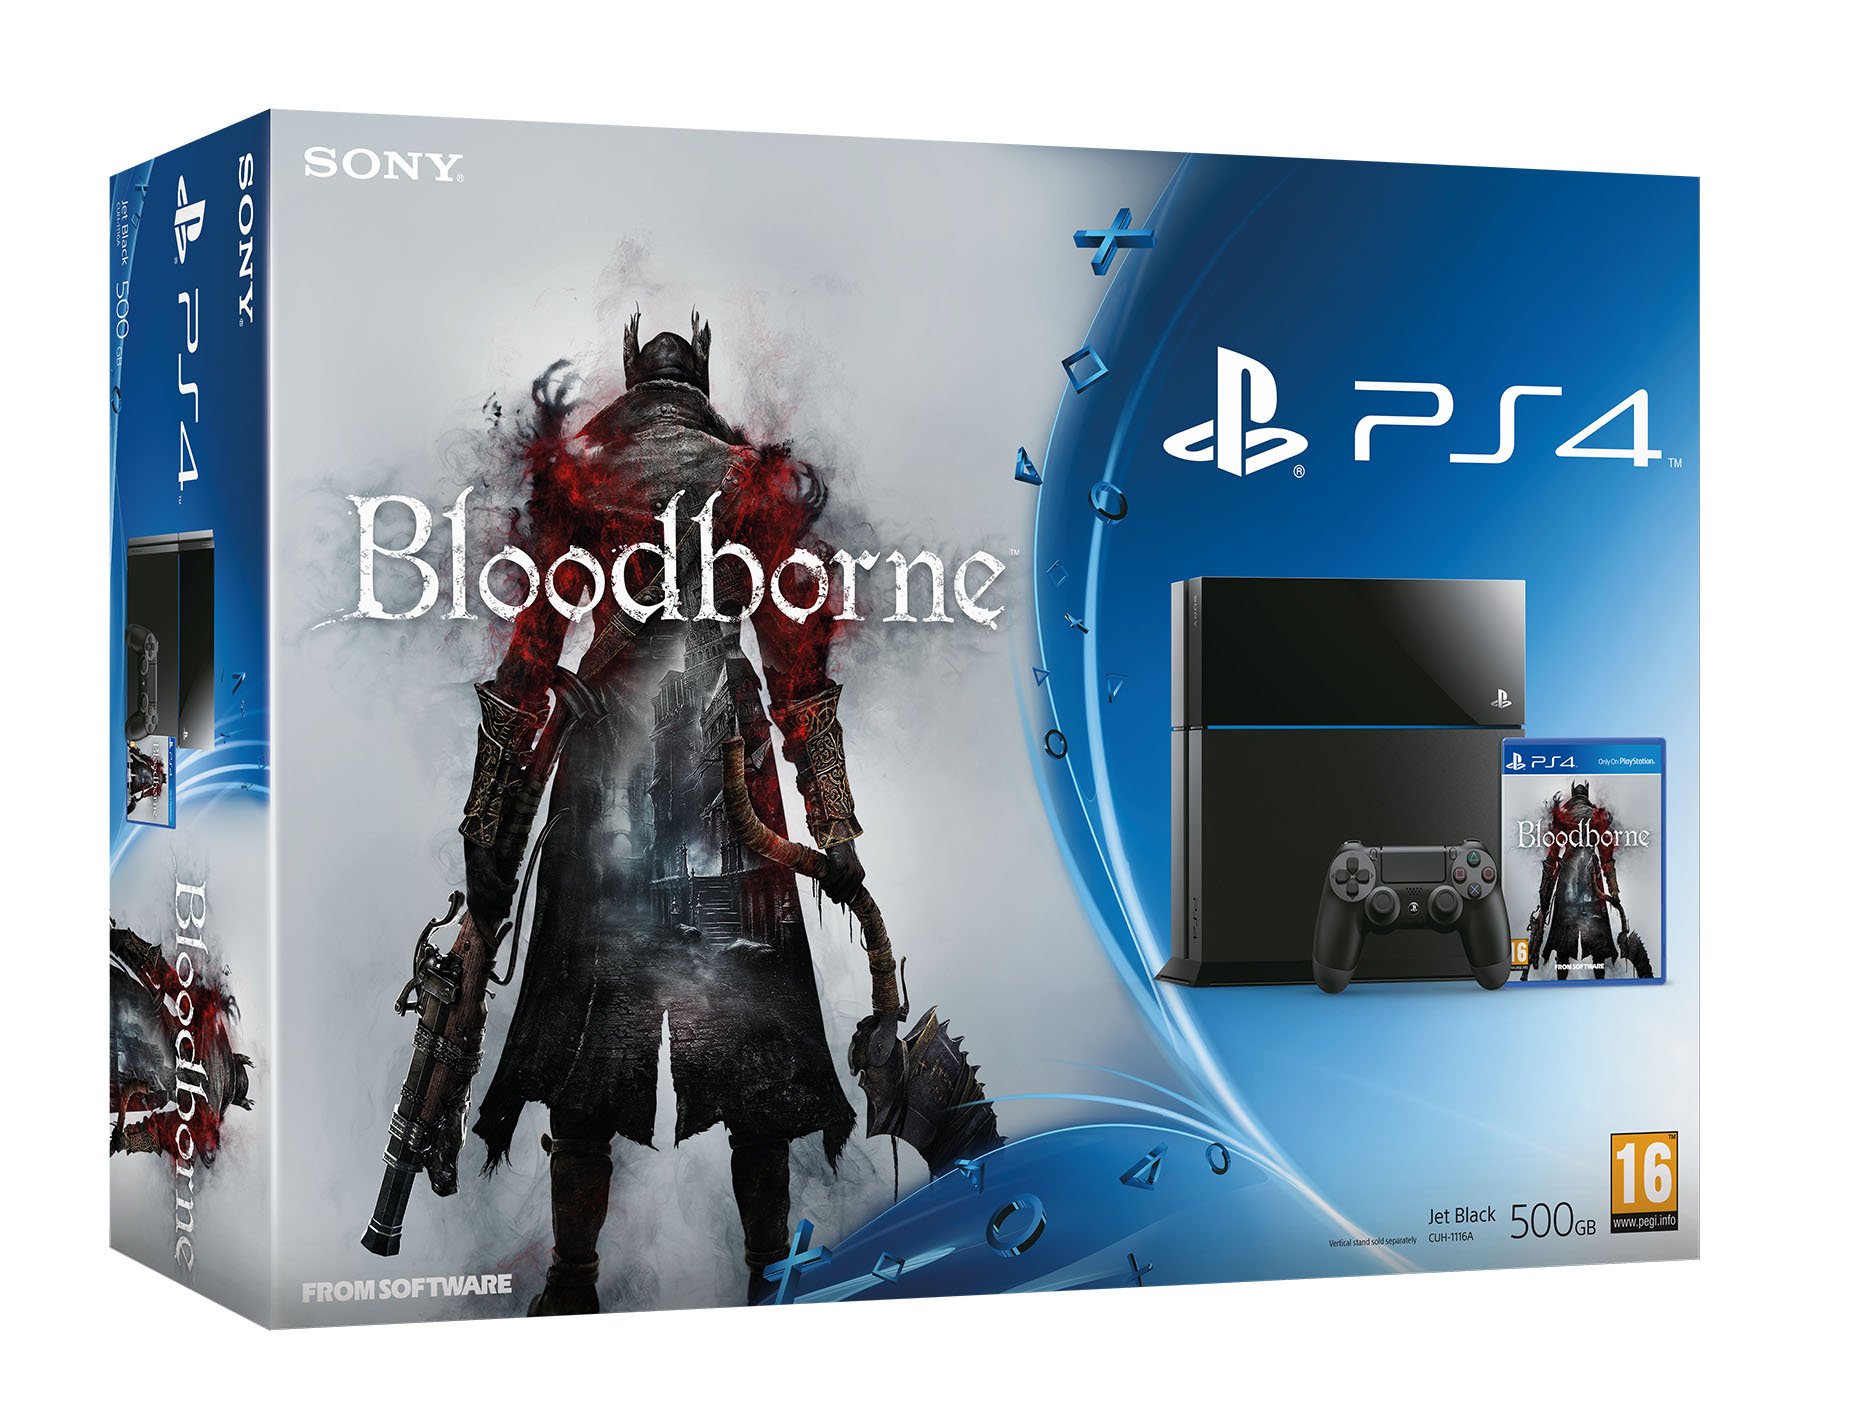 Bloodborne PS4 bundle announced for Europe - Gematsu